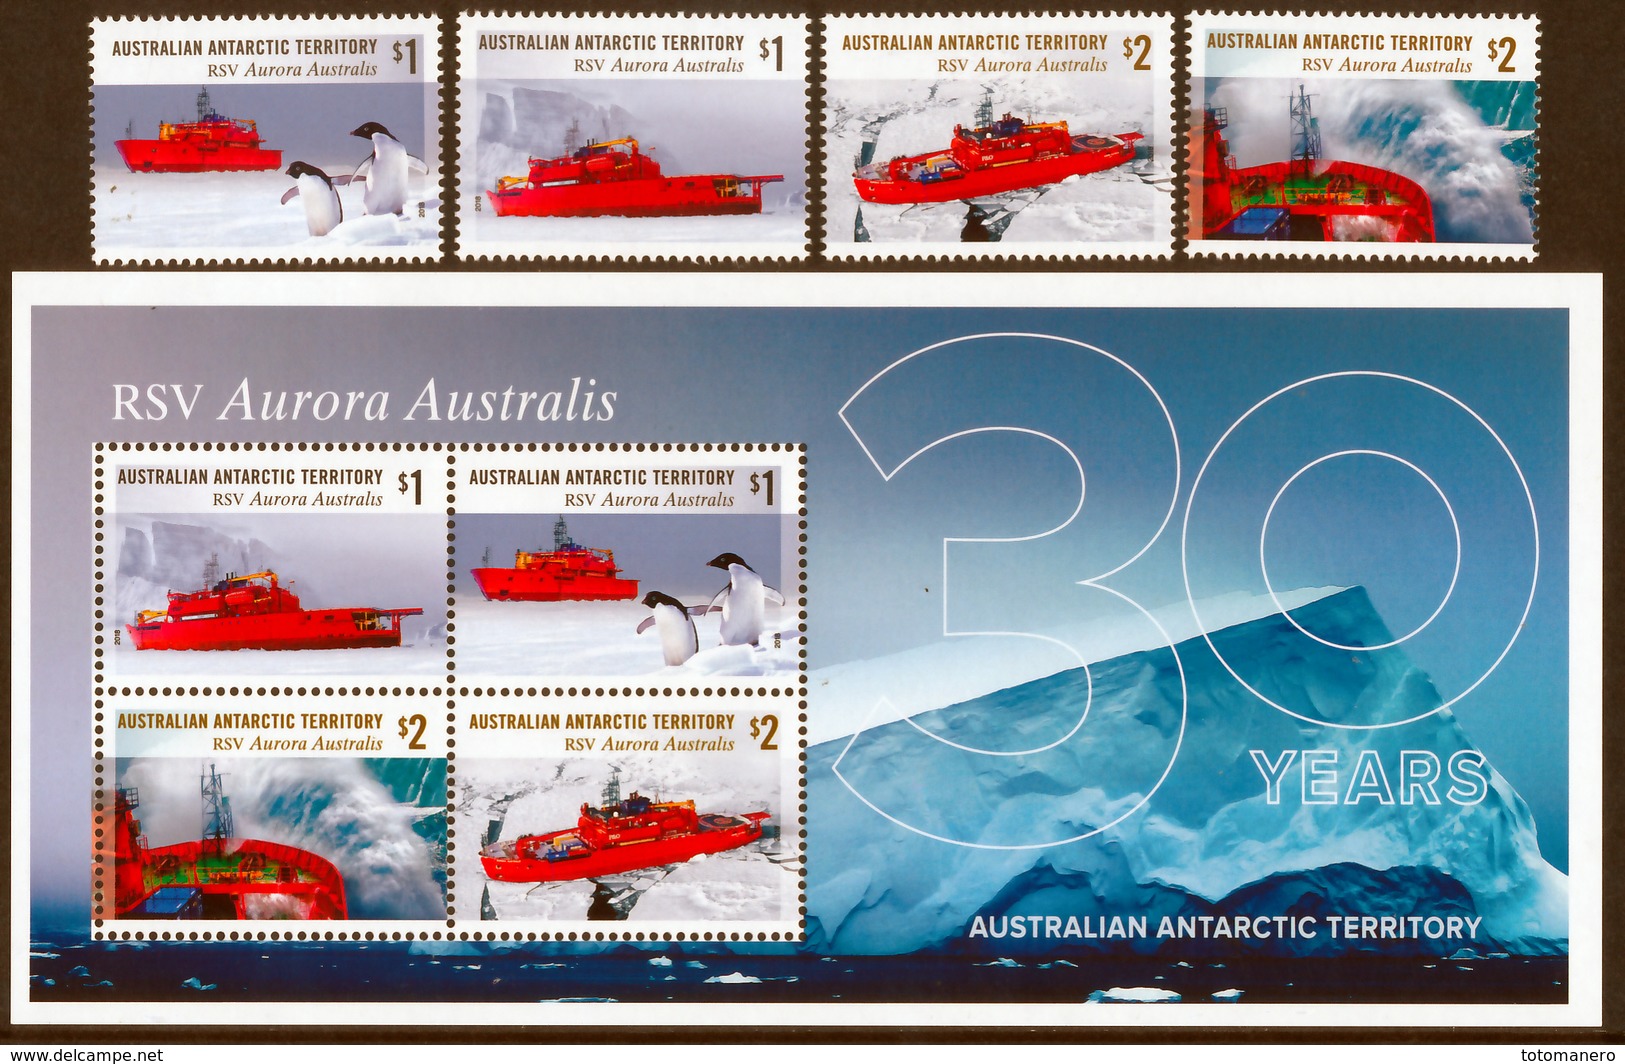 A.A.T. AUSTRALIAN ANTARCTIC TERRITORY 2018 RSV Aurora Australis Set & Minisheet  [MNH] - Nuovi